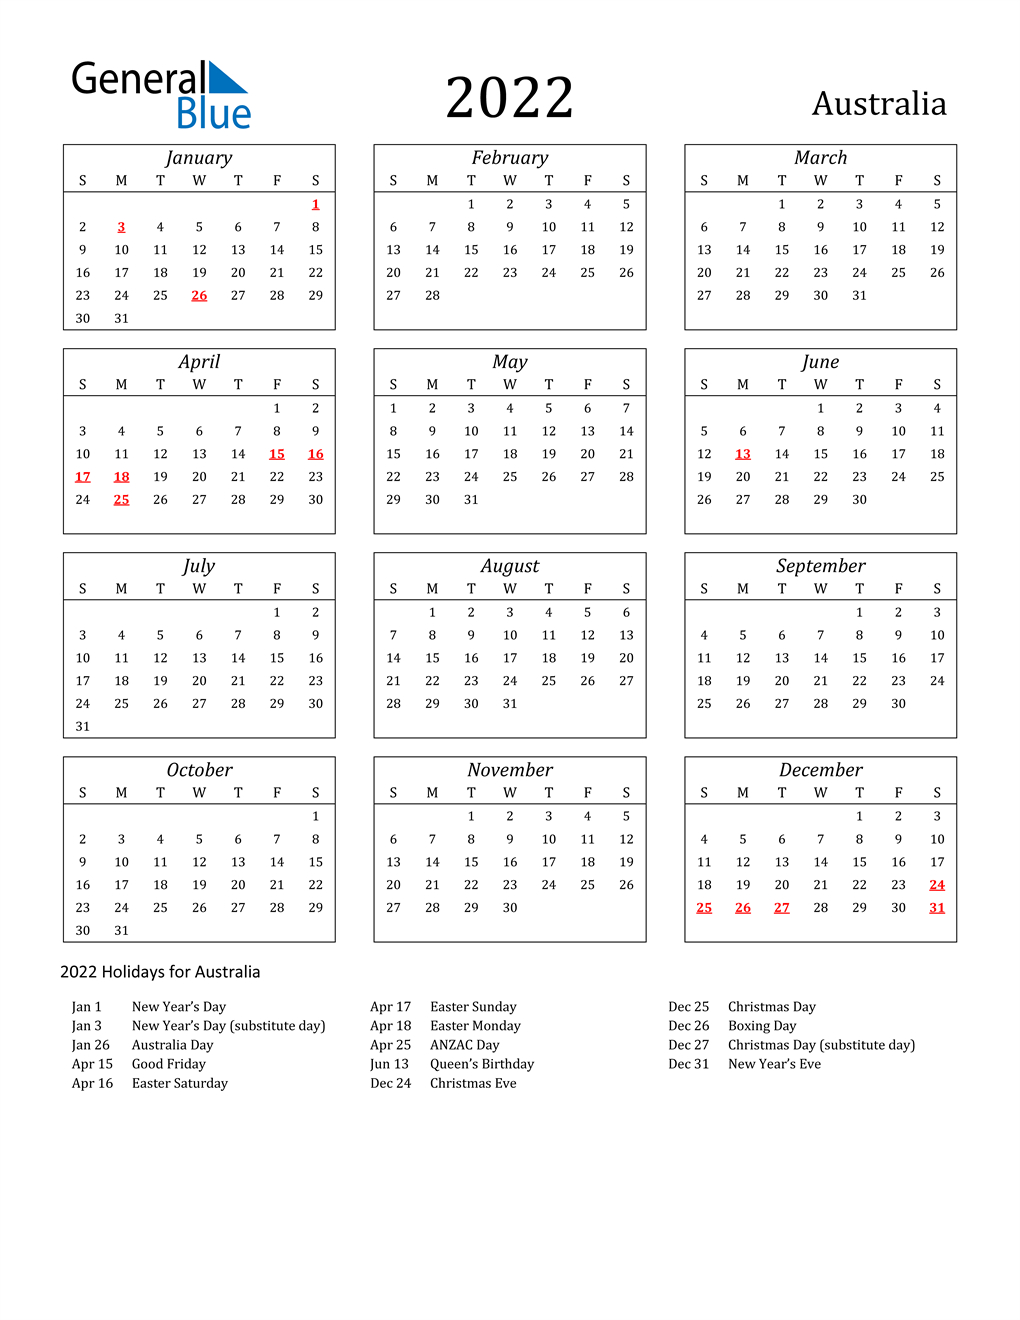 Global Holiday Calendar 2022